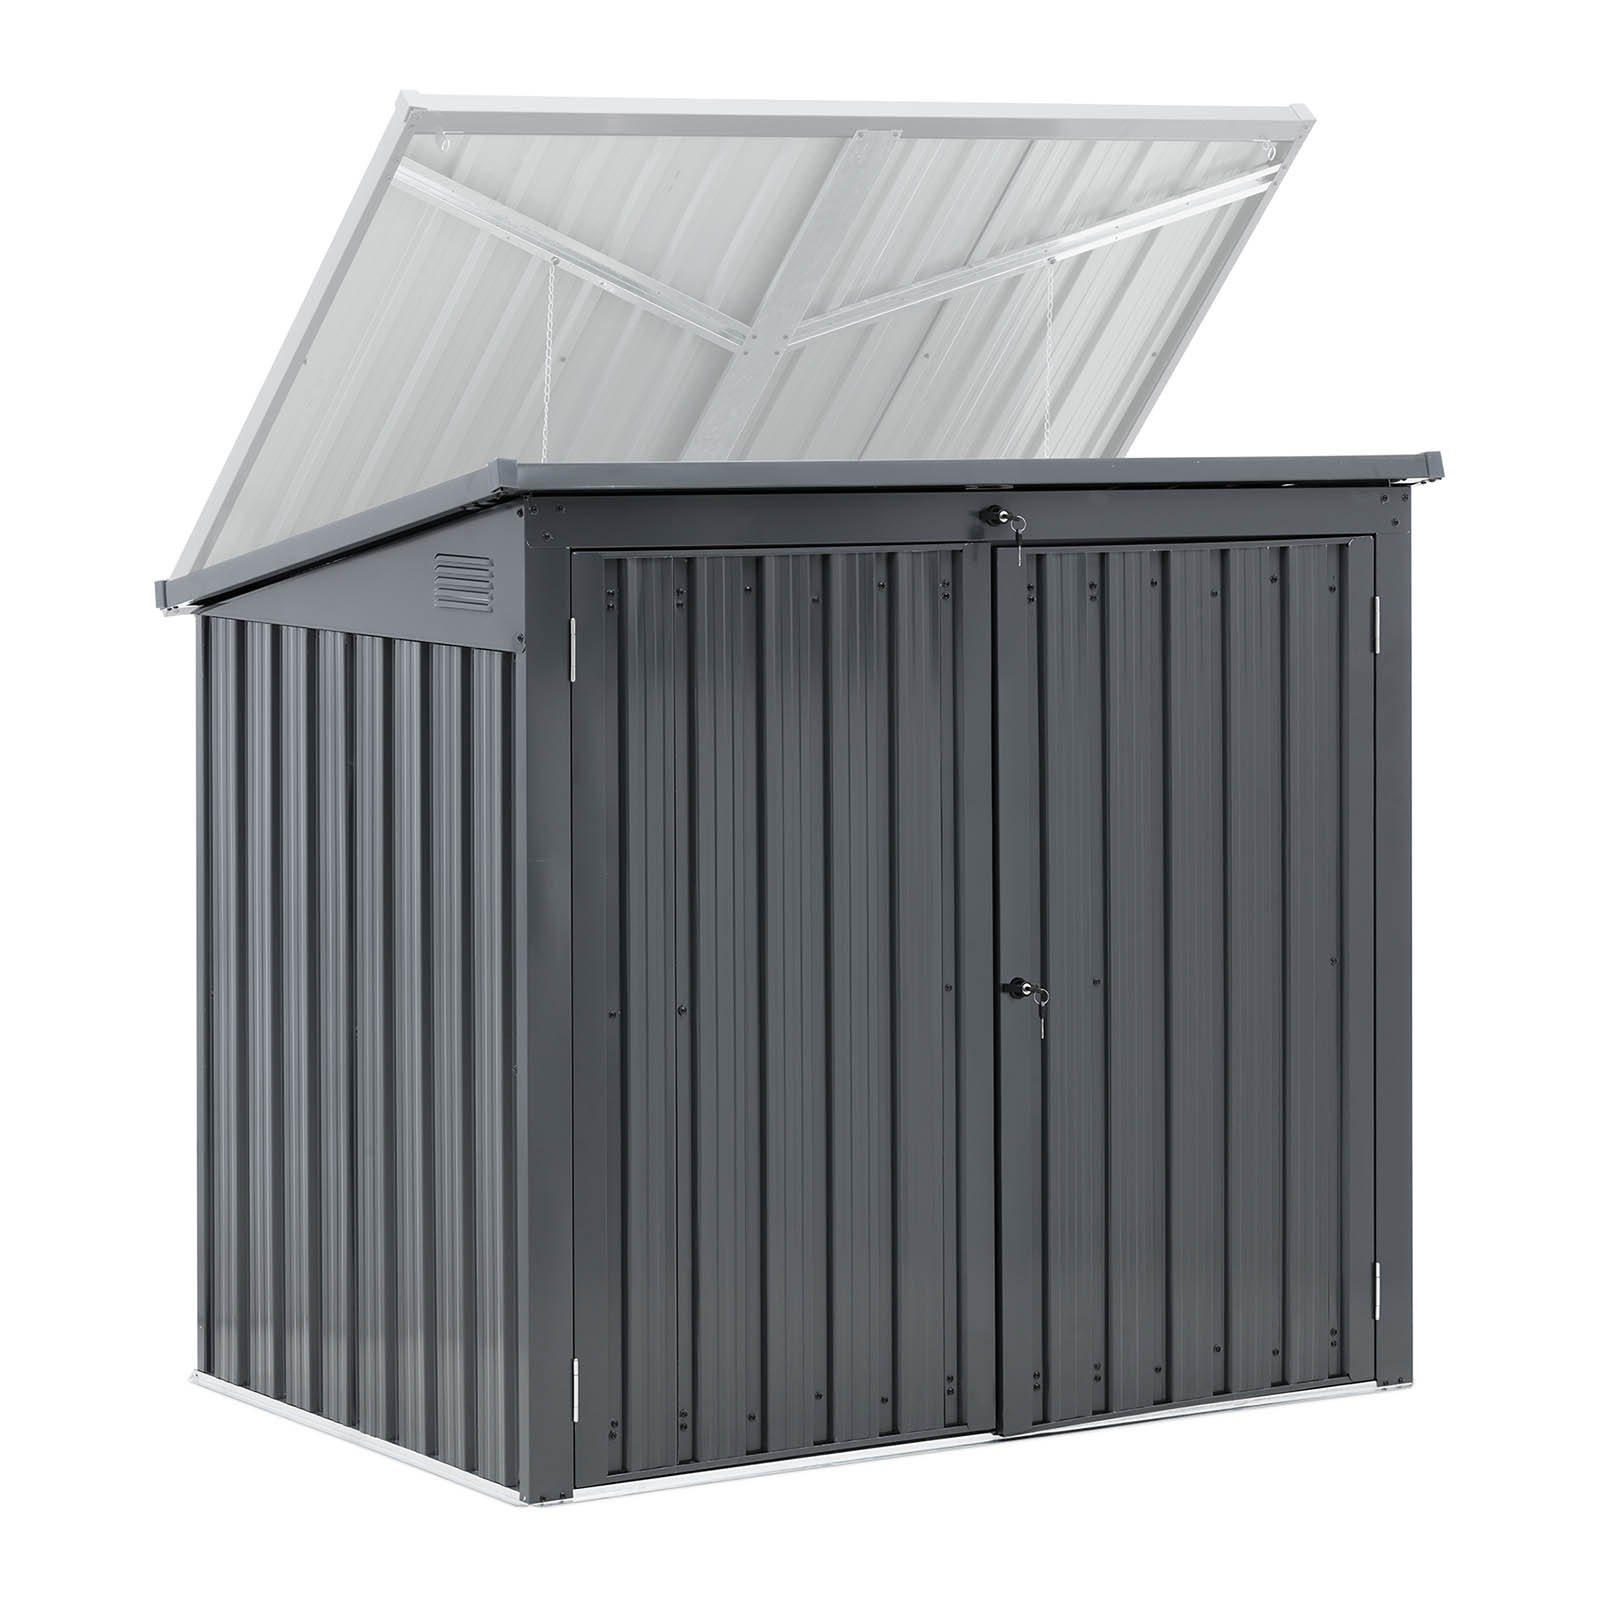 Uniprodo Gerätehaus Metall-Mülltonnenbox Mülltonnenverkleidung für 2 Tonnen (240 L), BxT: 90x289 cm